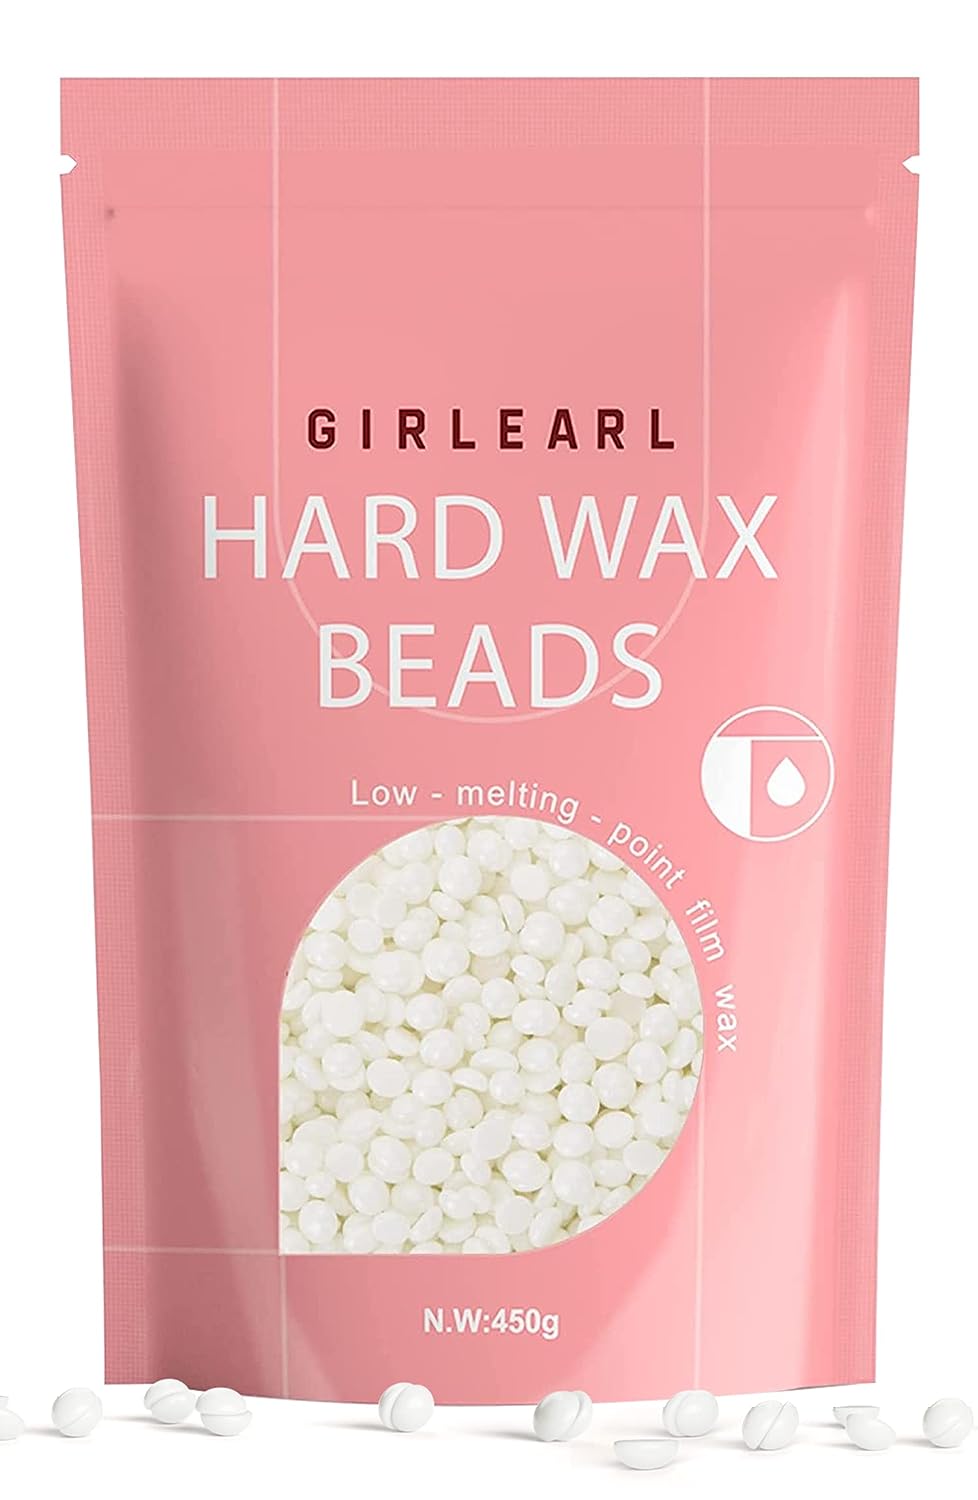 Wax Beads WholeSale - Price List, Bulk Buy at